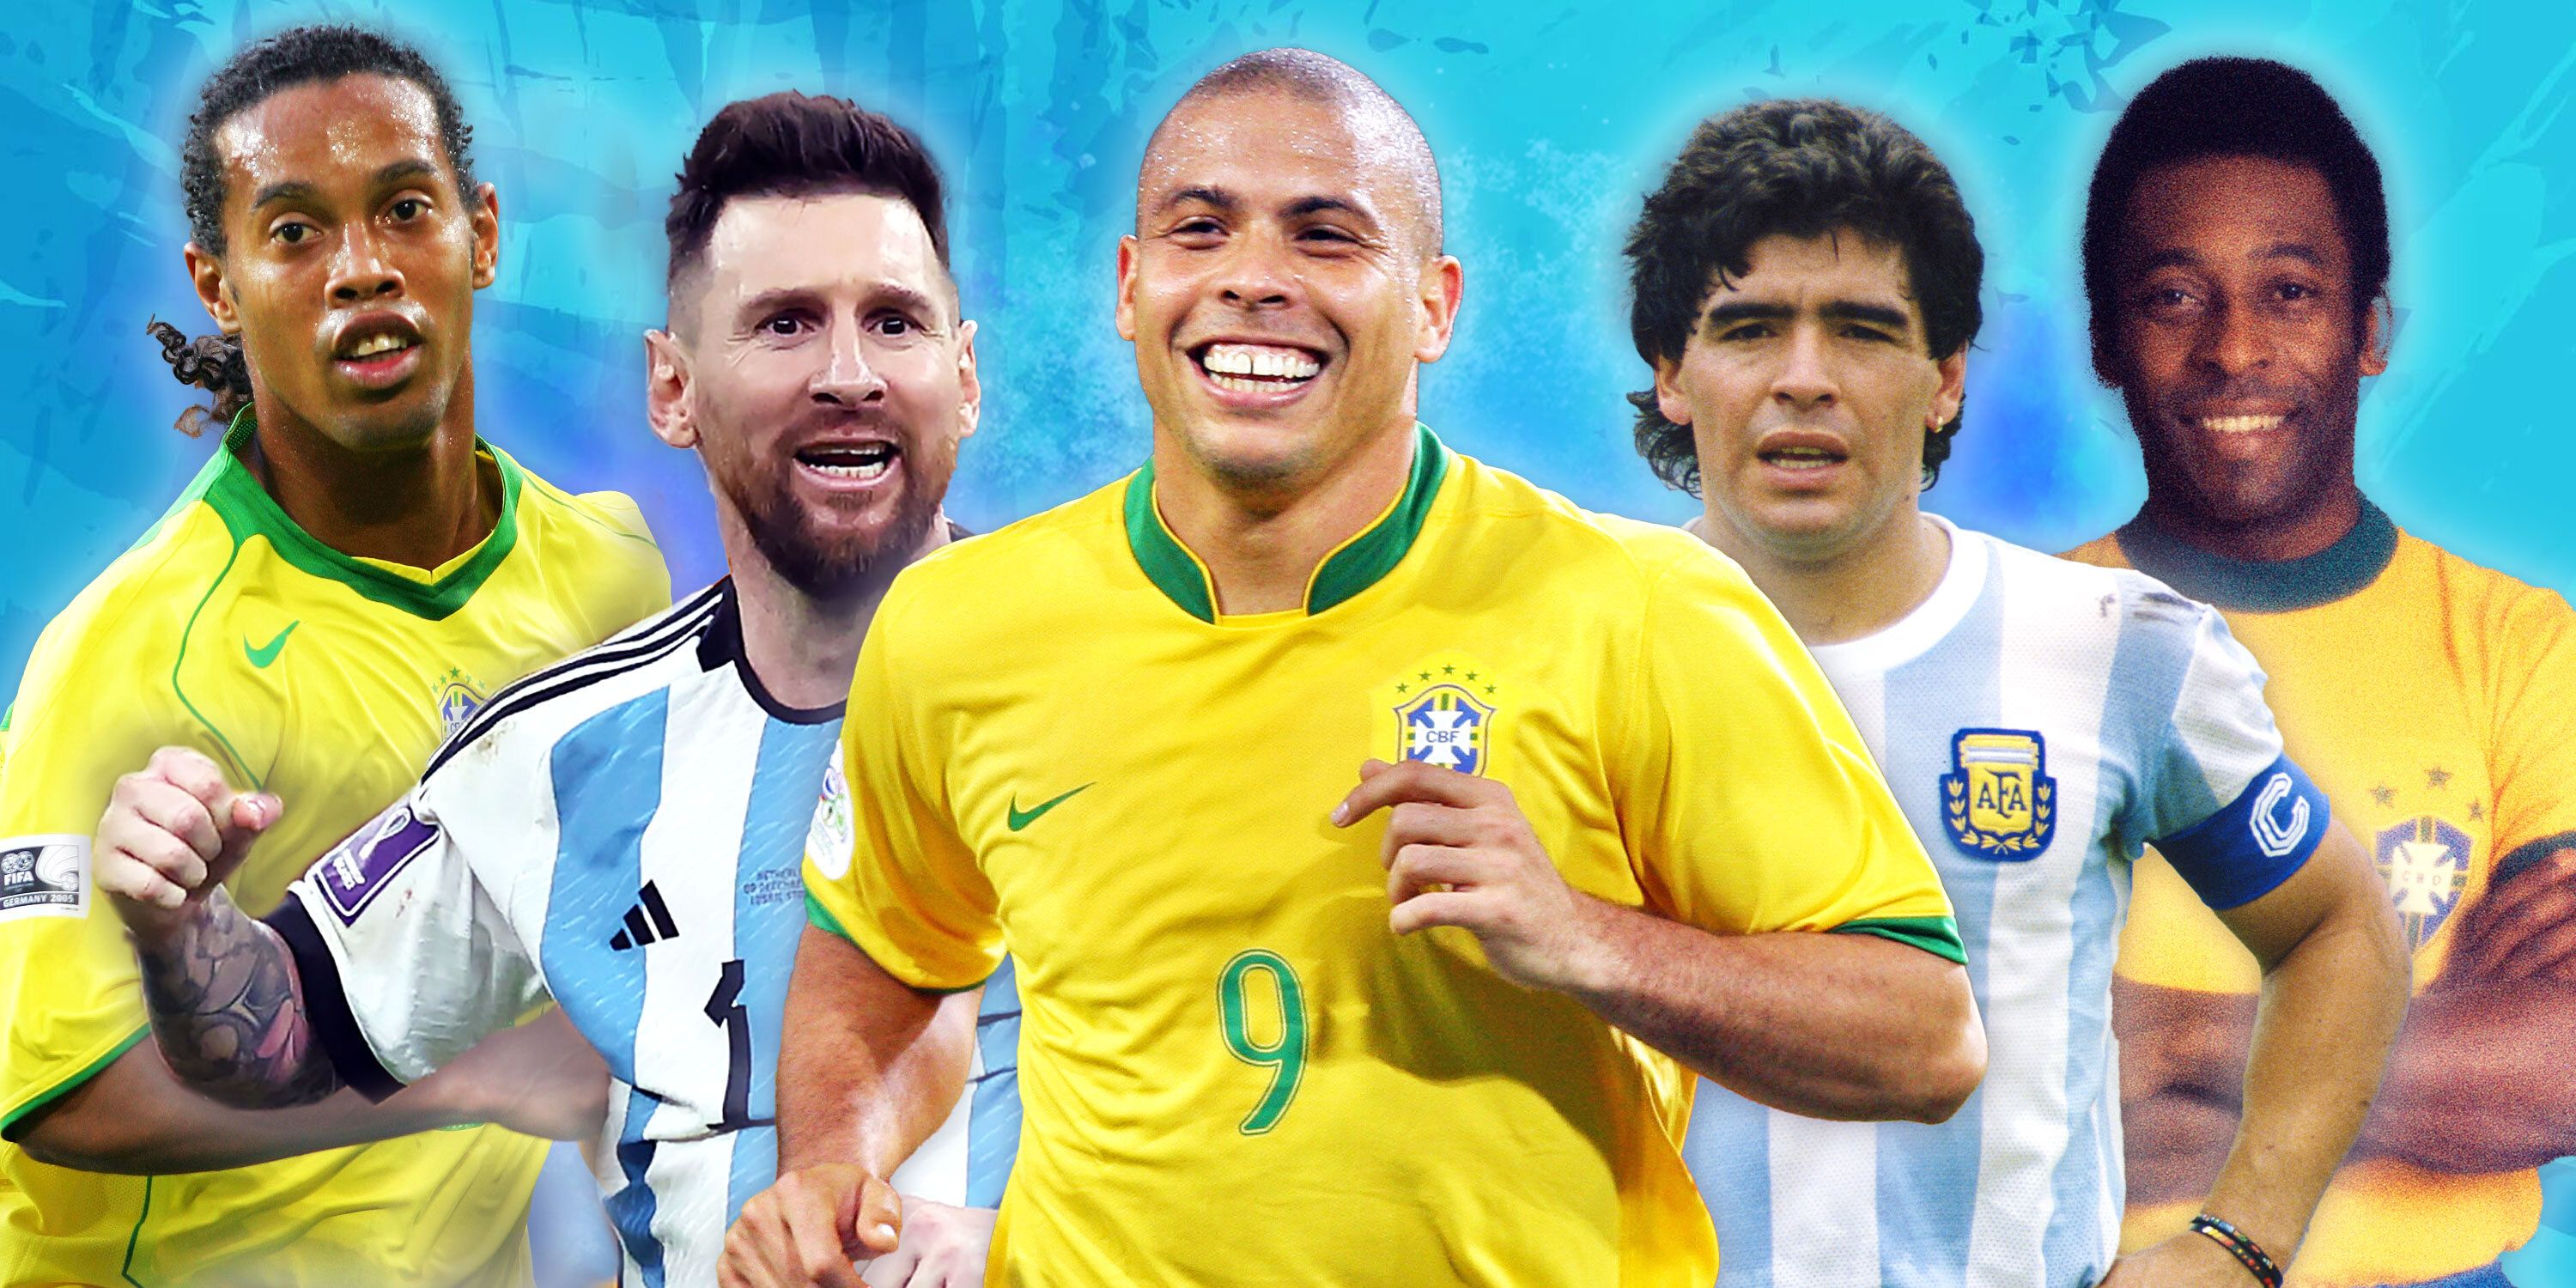 Ronaldo Nazario named the 8 greatest players in football history